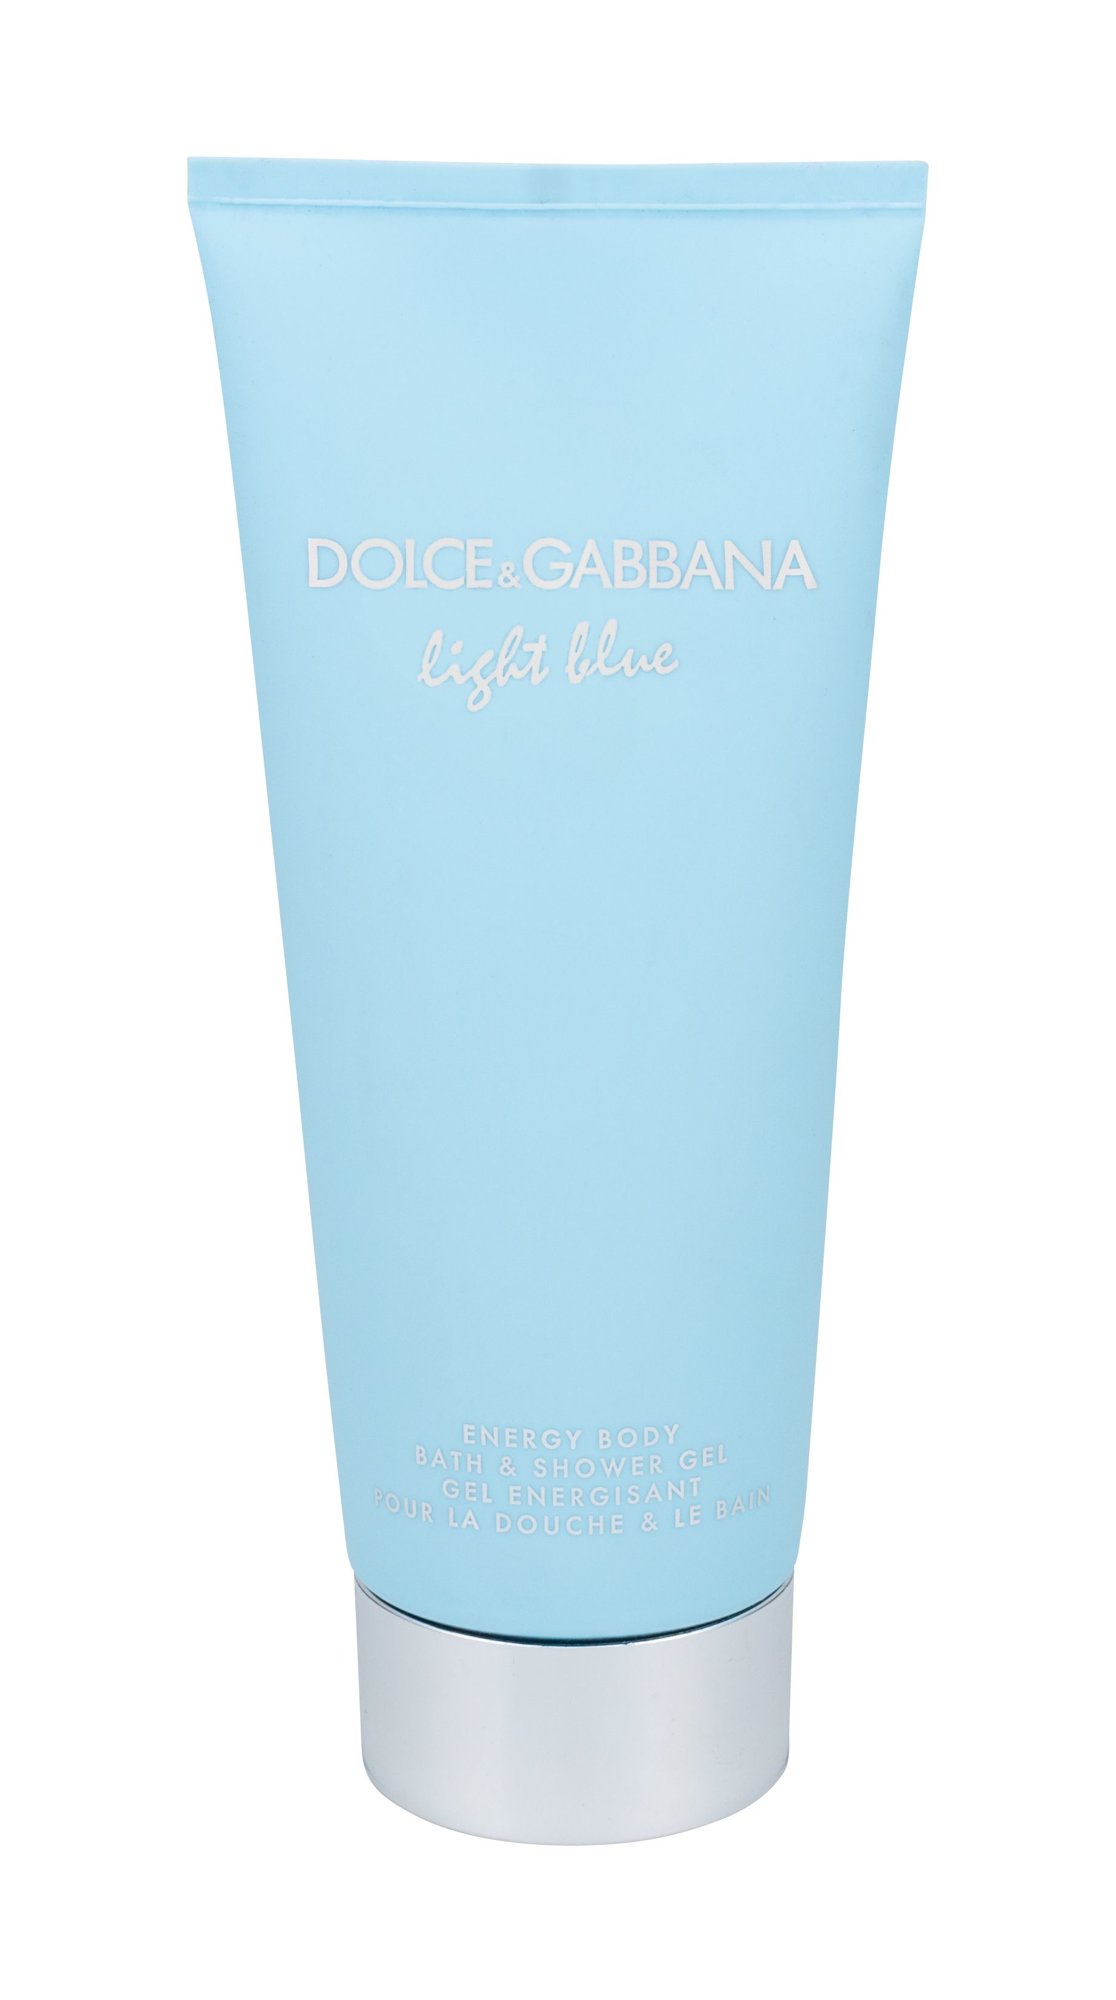 Dolce&Gabbana Light Blue, tusfürdő gél 50ml